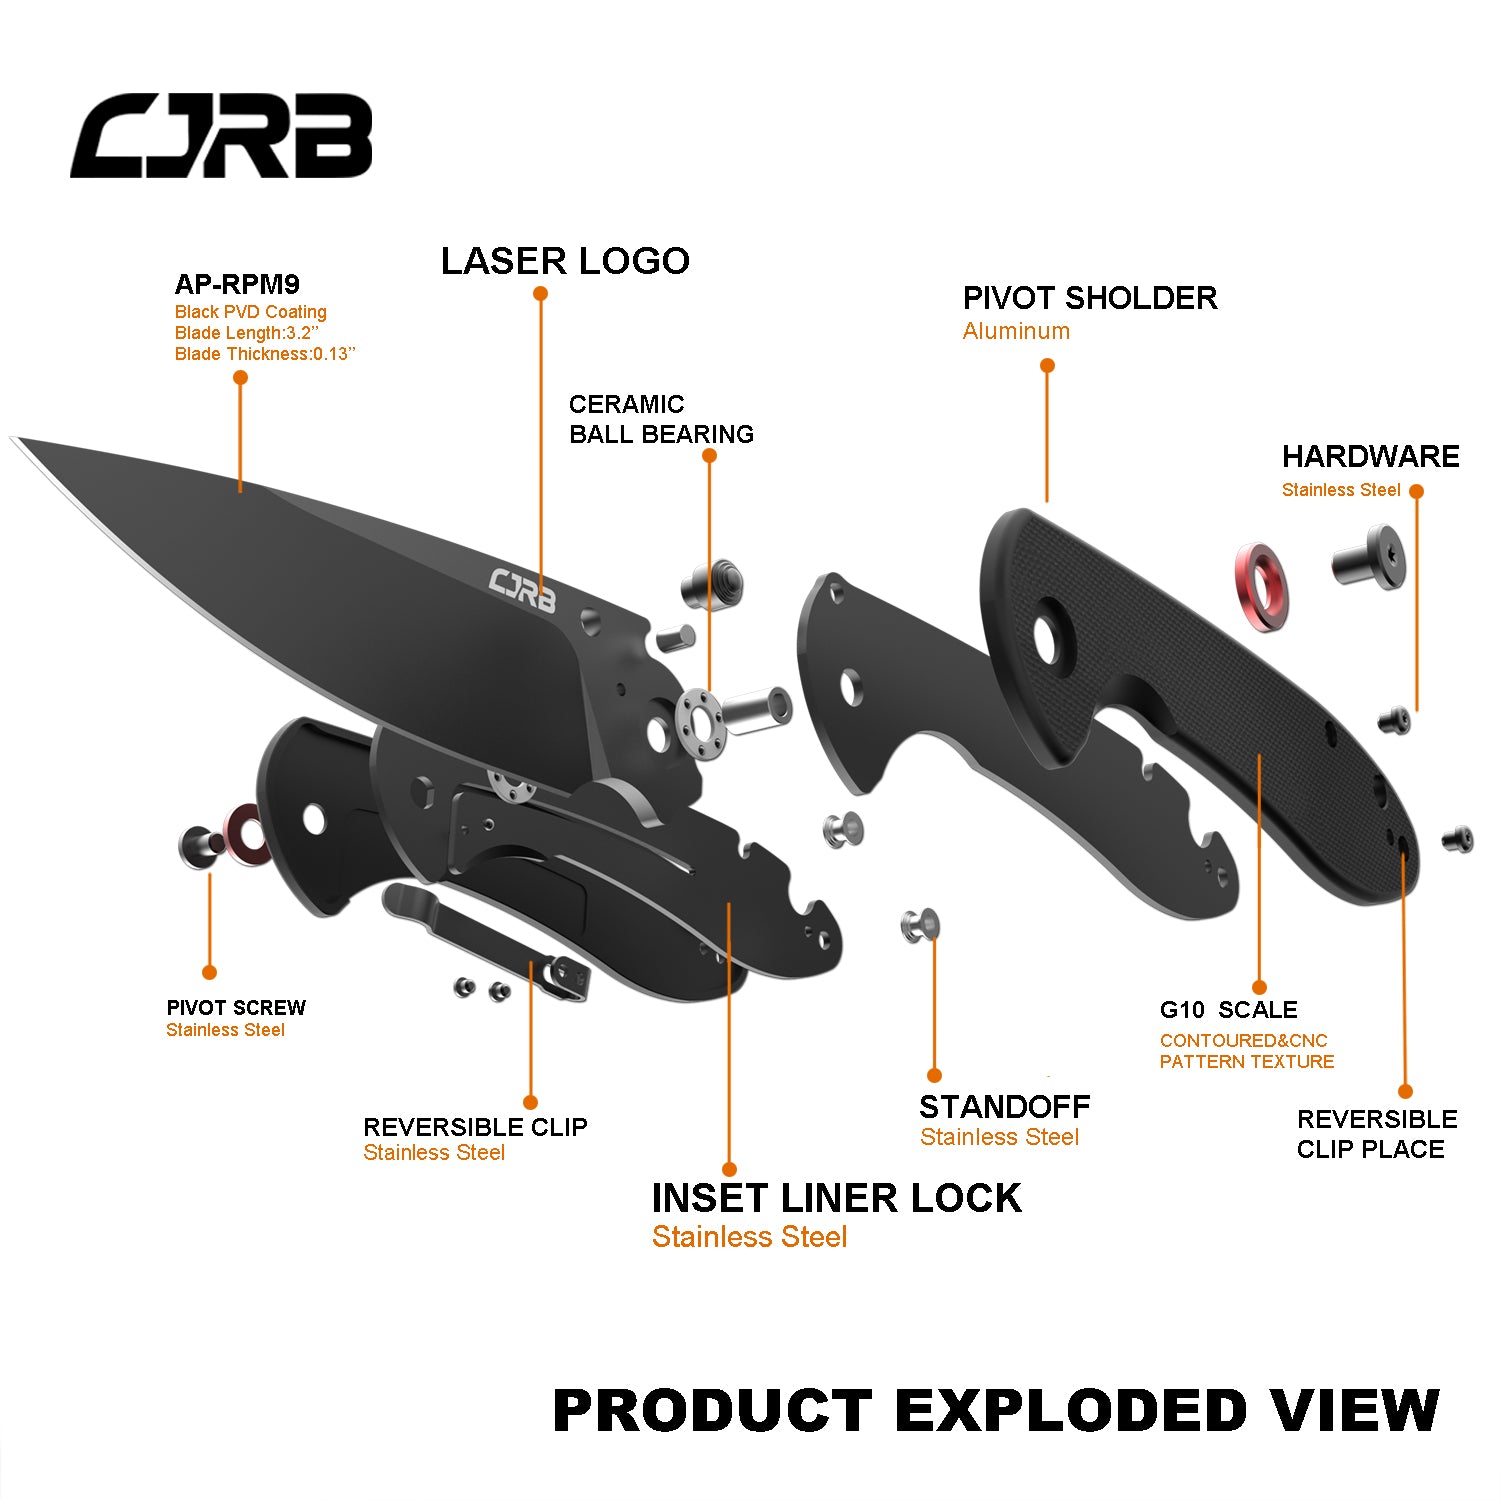 CJRB FELDSPAR J1912 AR-RPM9 POWDER STEEL BLACK PVD COATED BLADE G10 HANDLE FOLDING KNIVES